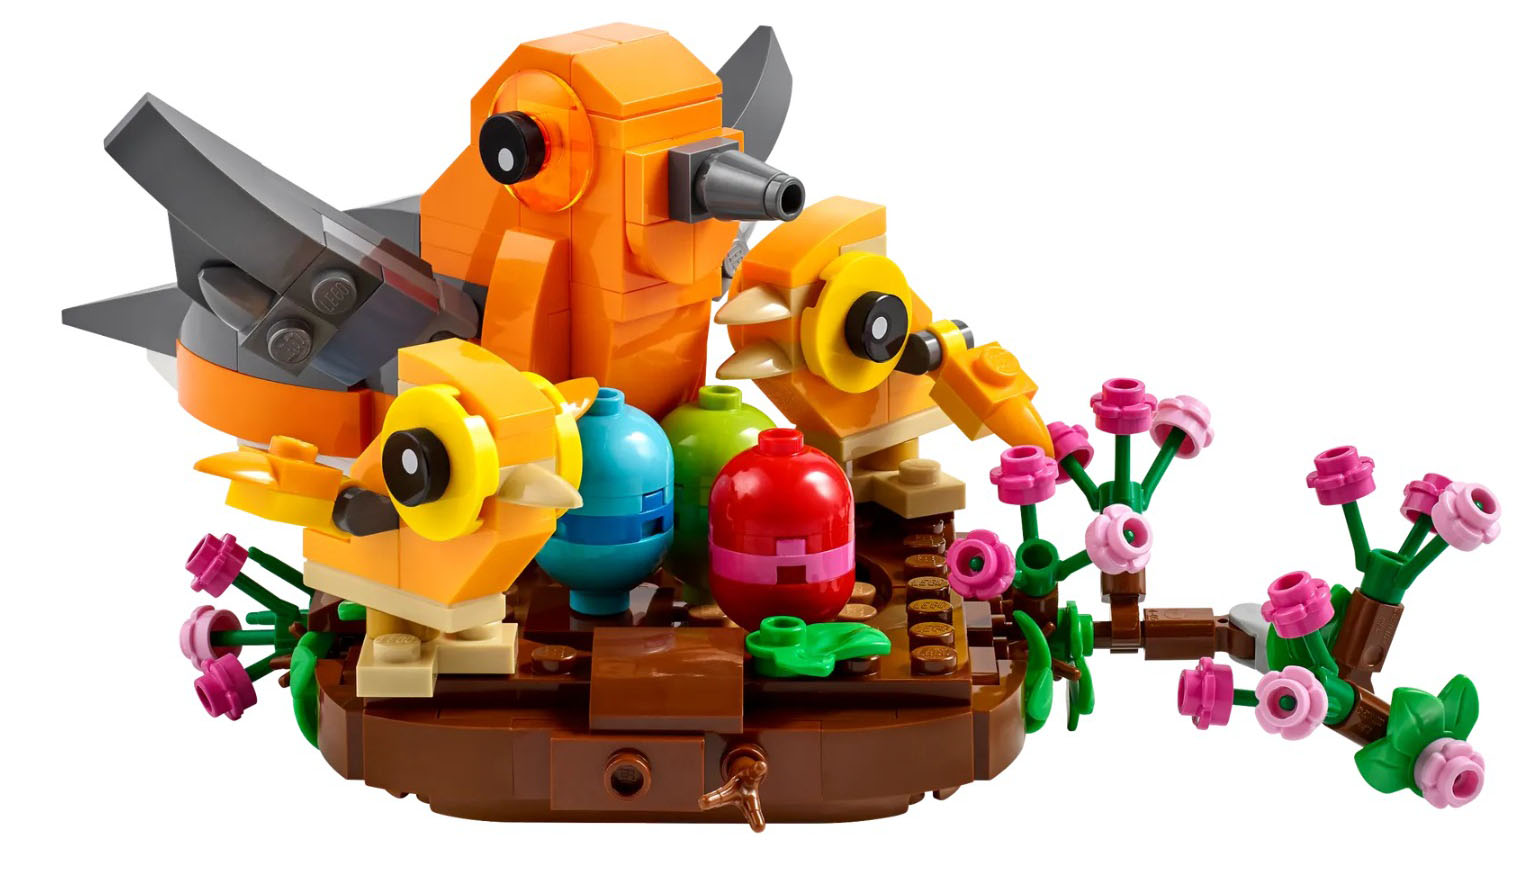 LEGO 40639 Bird's Nest Officially Revealed | Release Date February 1st 2023